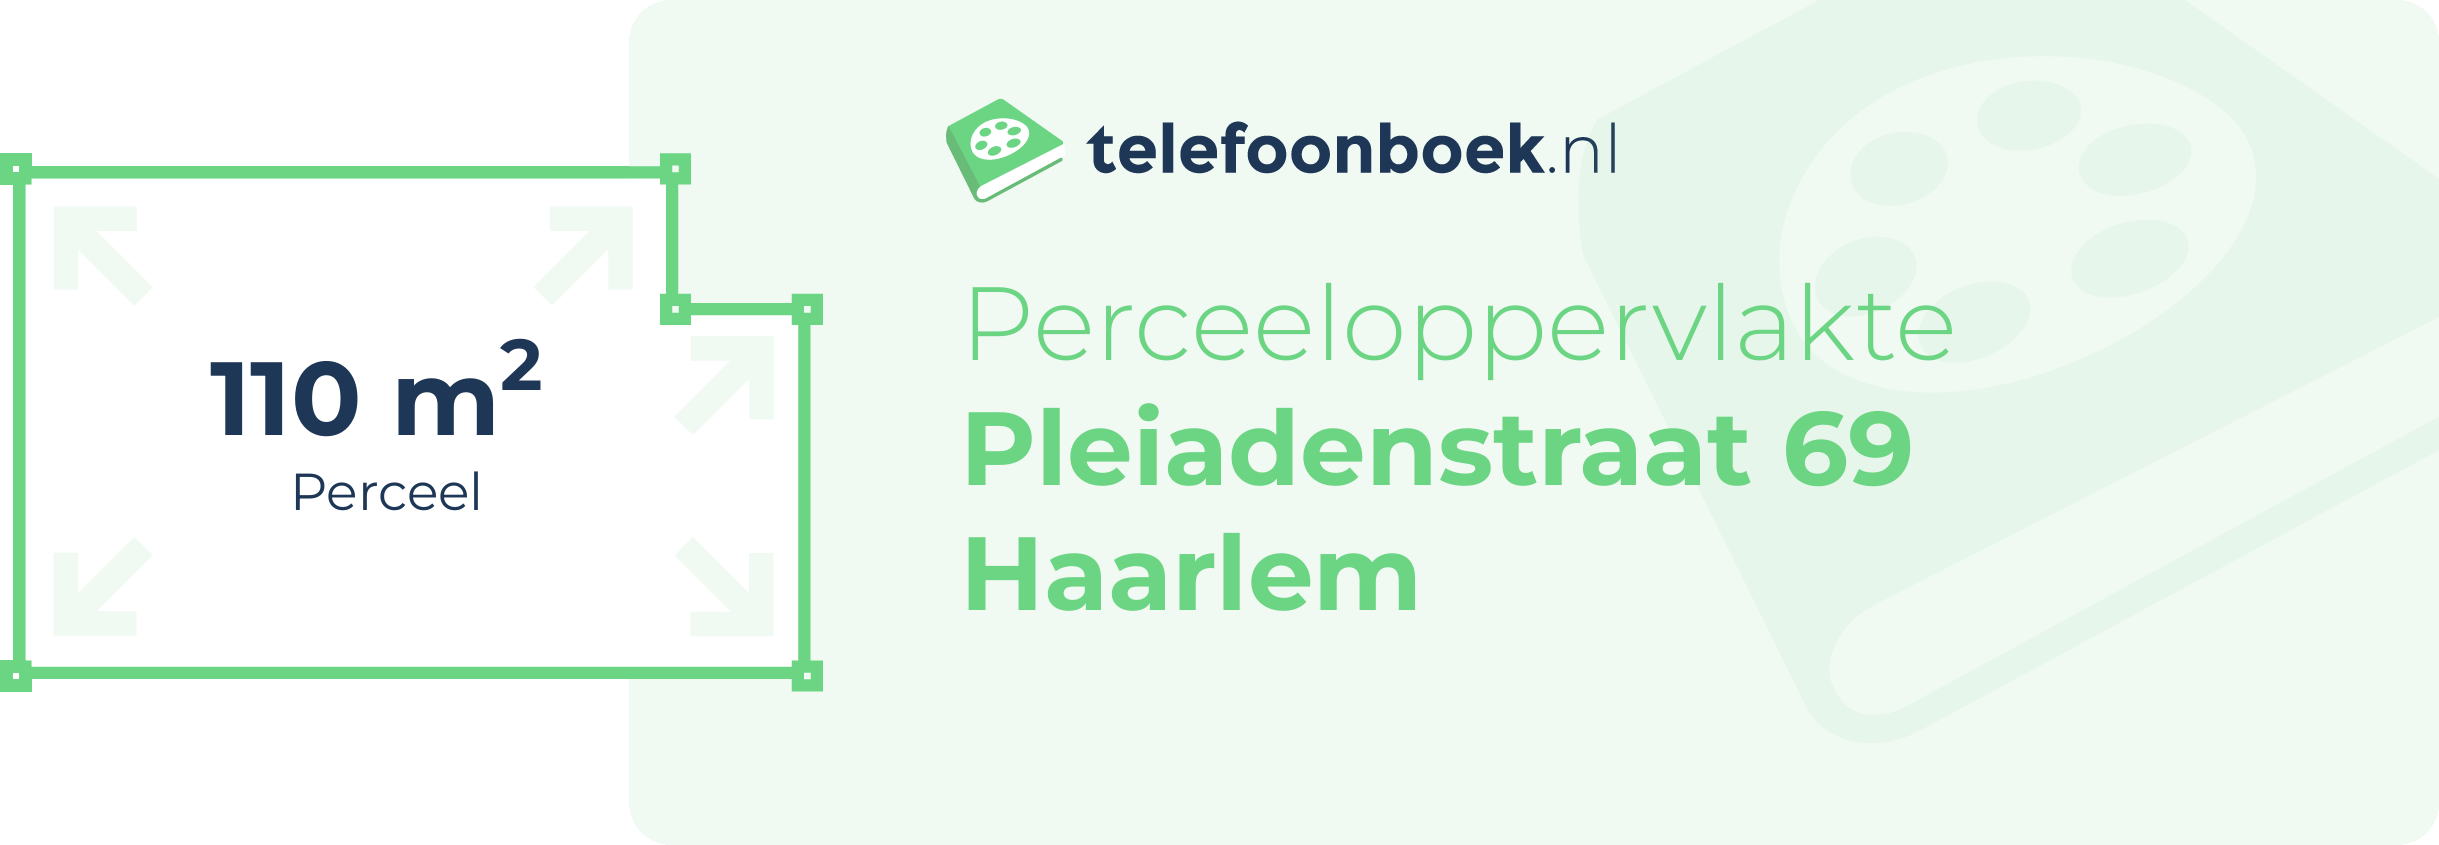 Perceeloppervlakte Pleiadenstraat 69 Haarlem